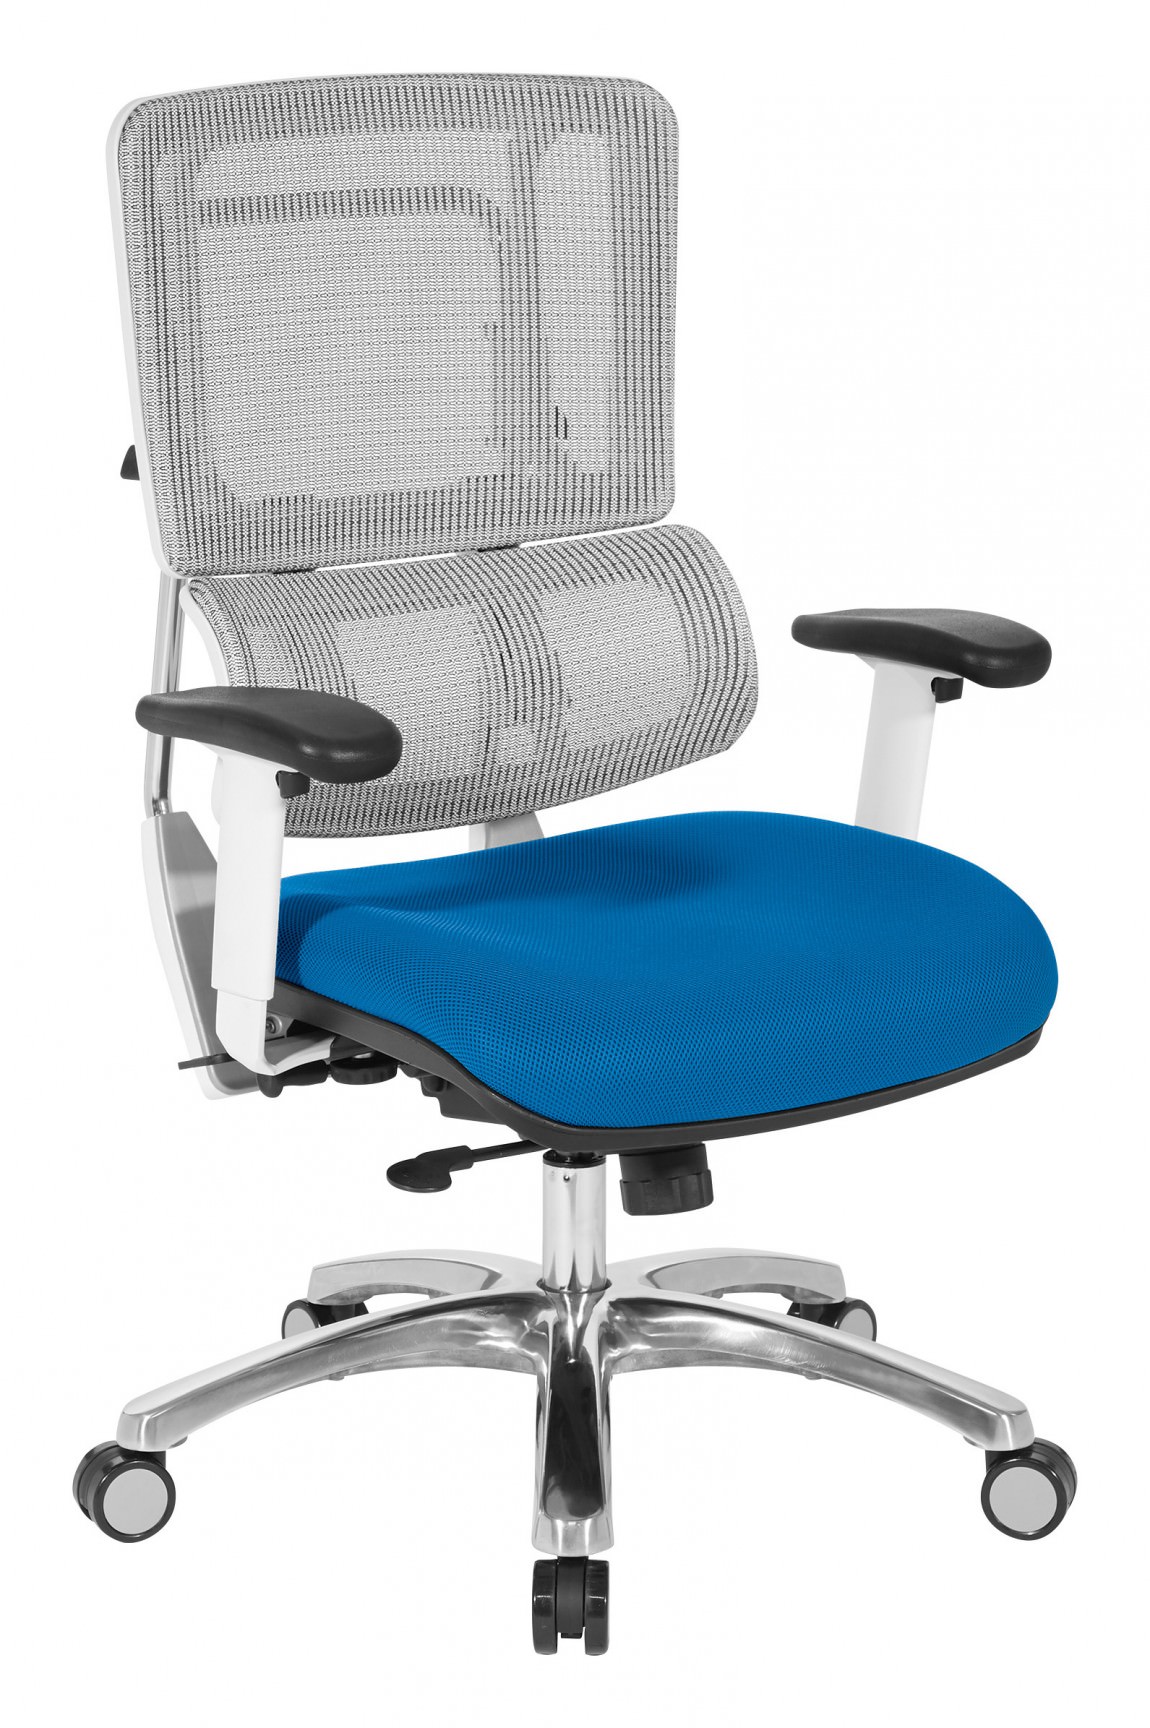 https://madisonliquidators.com/images/p/1150/25831-mesh-back-office-chair-with-lumbar-support-1.jpg